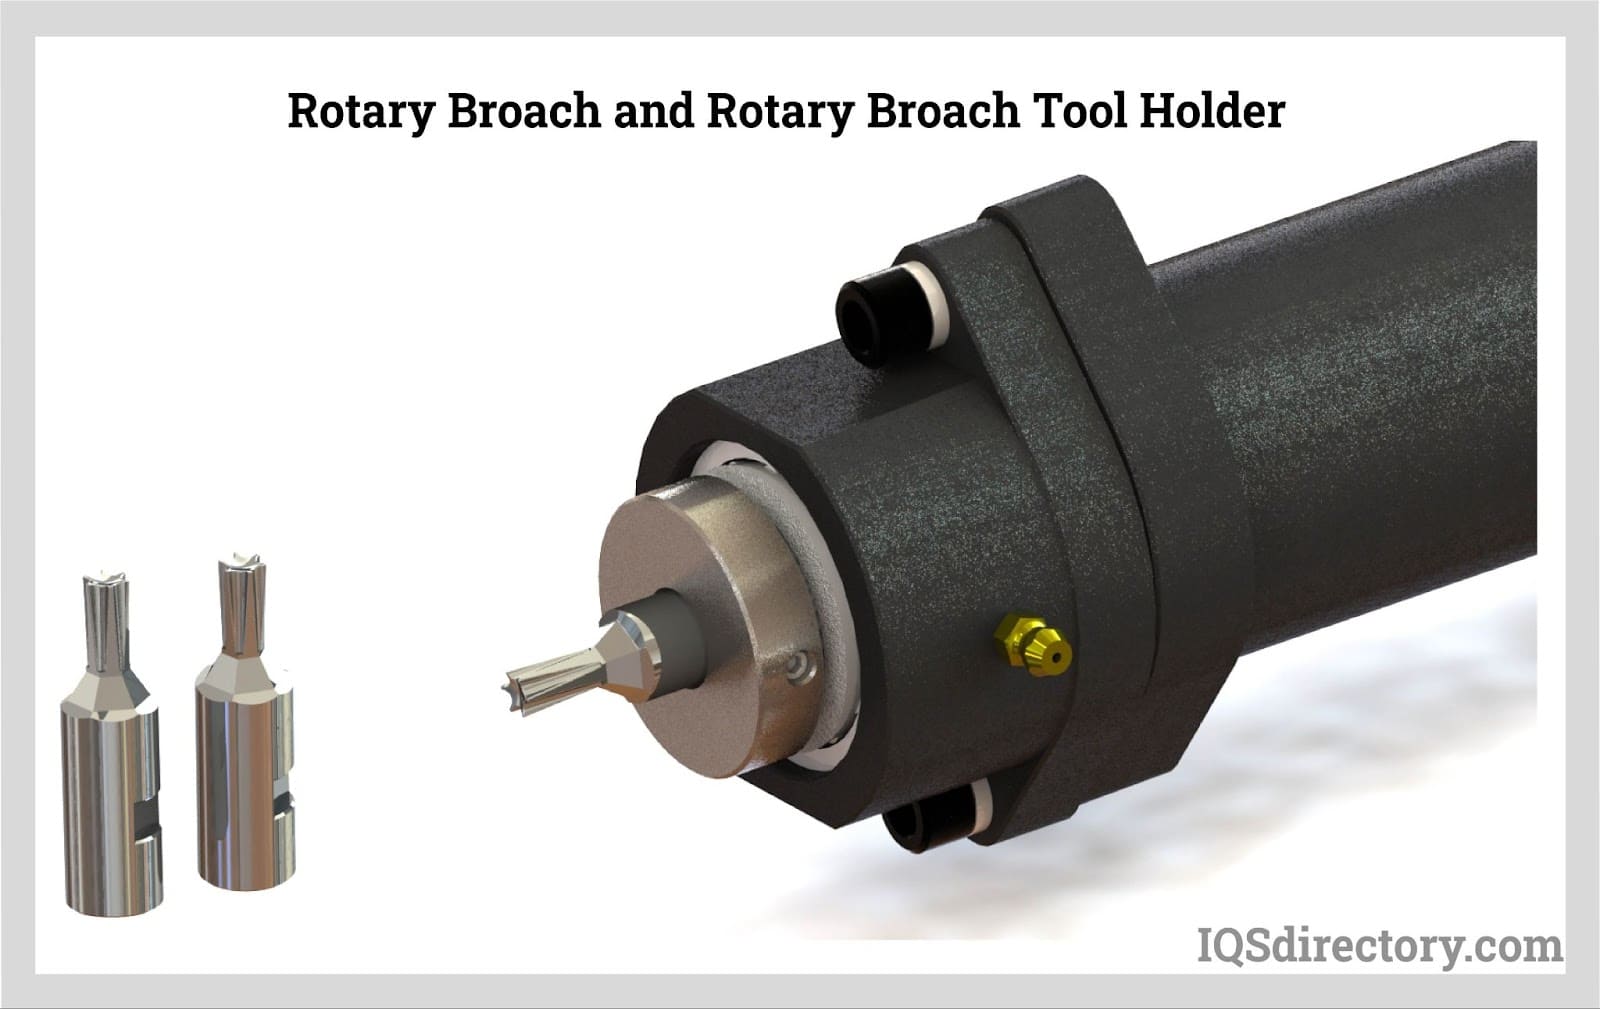 Rotary Broach and Rotary Broach Tool Holder